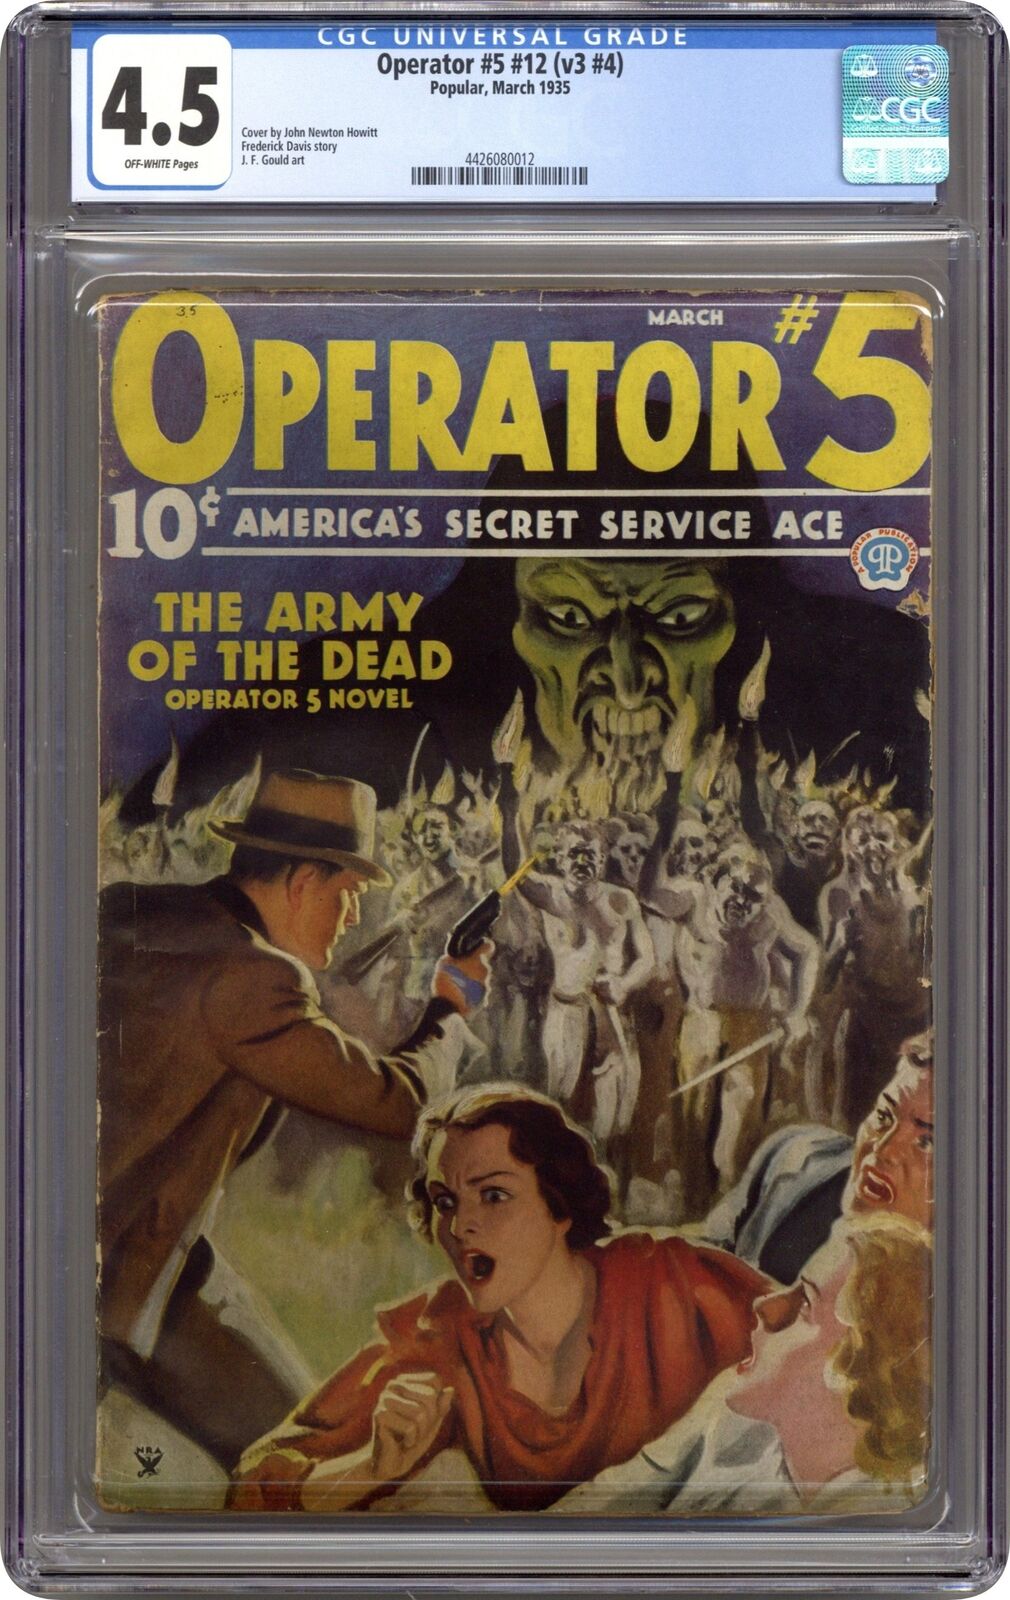 Operator #5 Pulp Mar 1935 Vol. 3 #4 CGC 4.5 4426080012